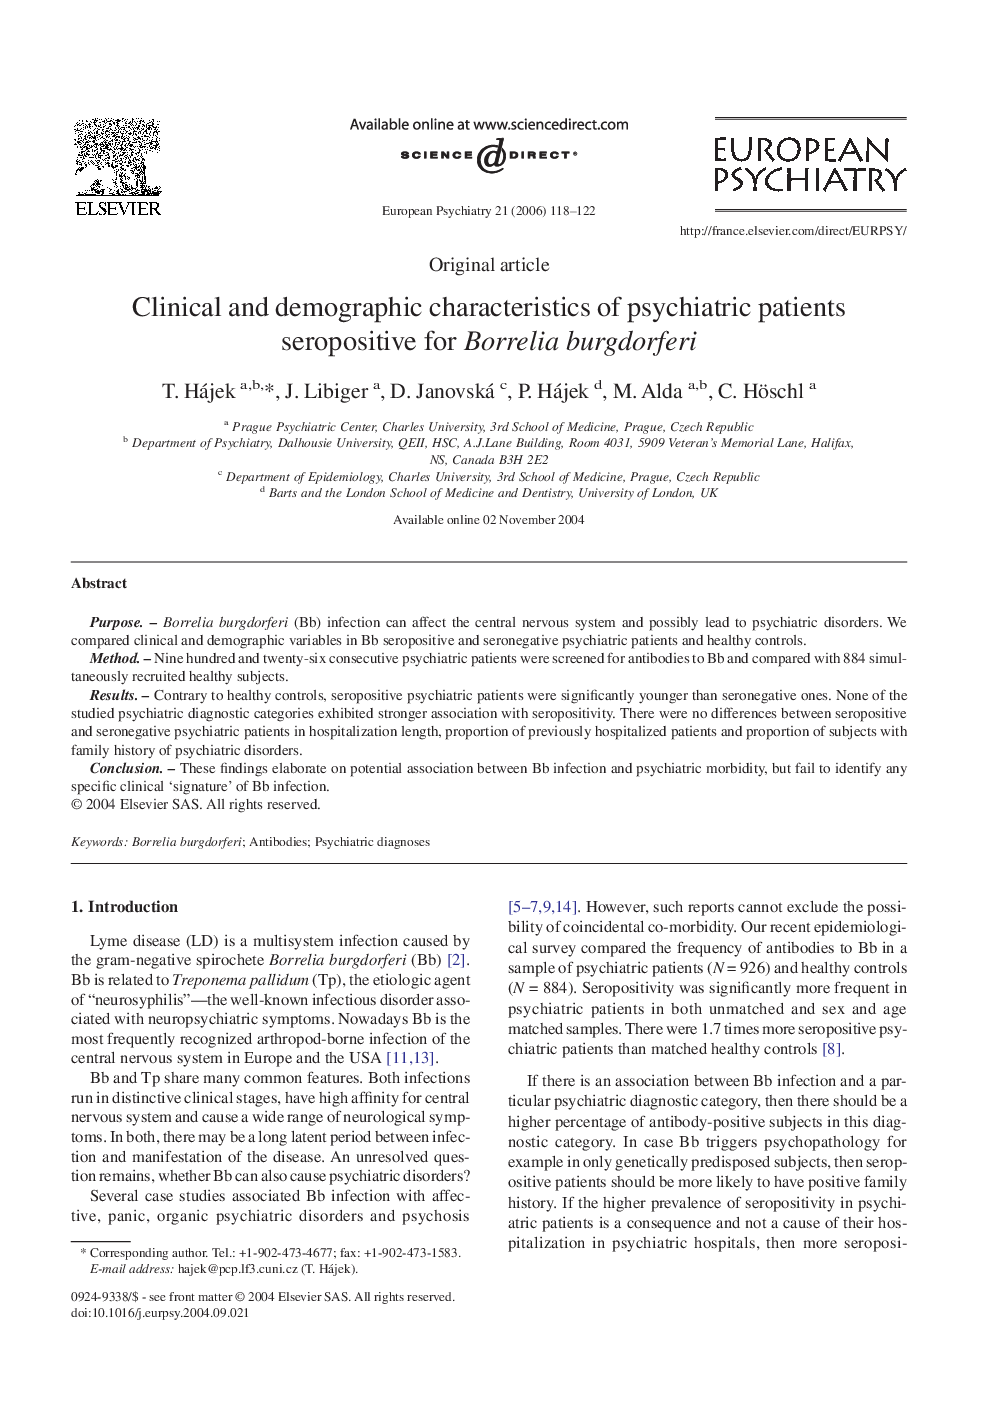 Clinical and demographic characteristics of psychiatric patients seropositive for Borrelia burgdorferi